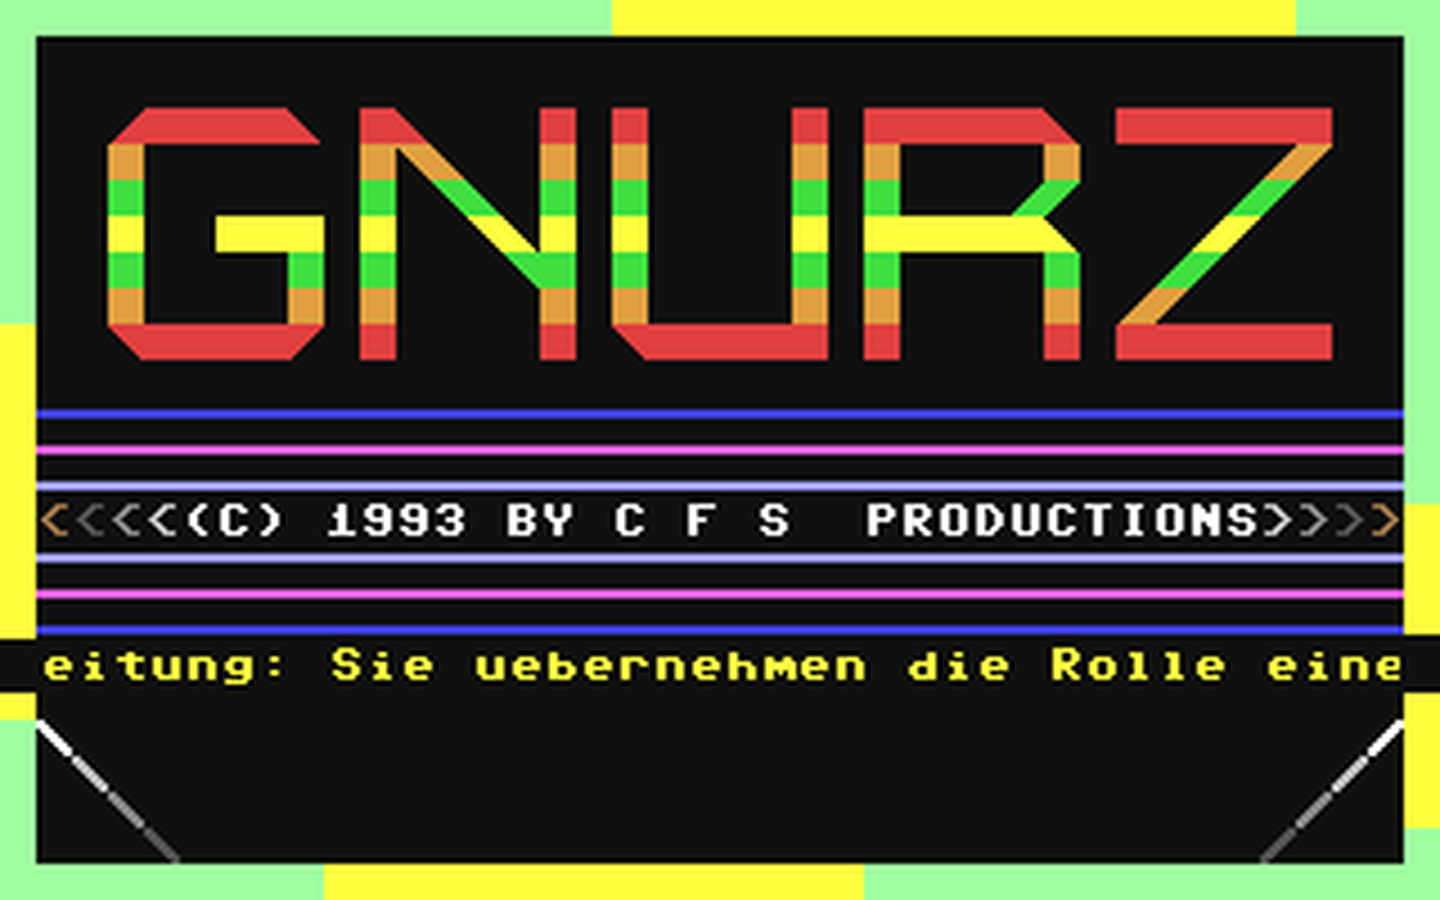 C64 GameBase Gnurz CFS_Productions 1993